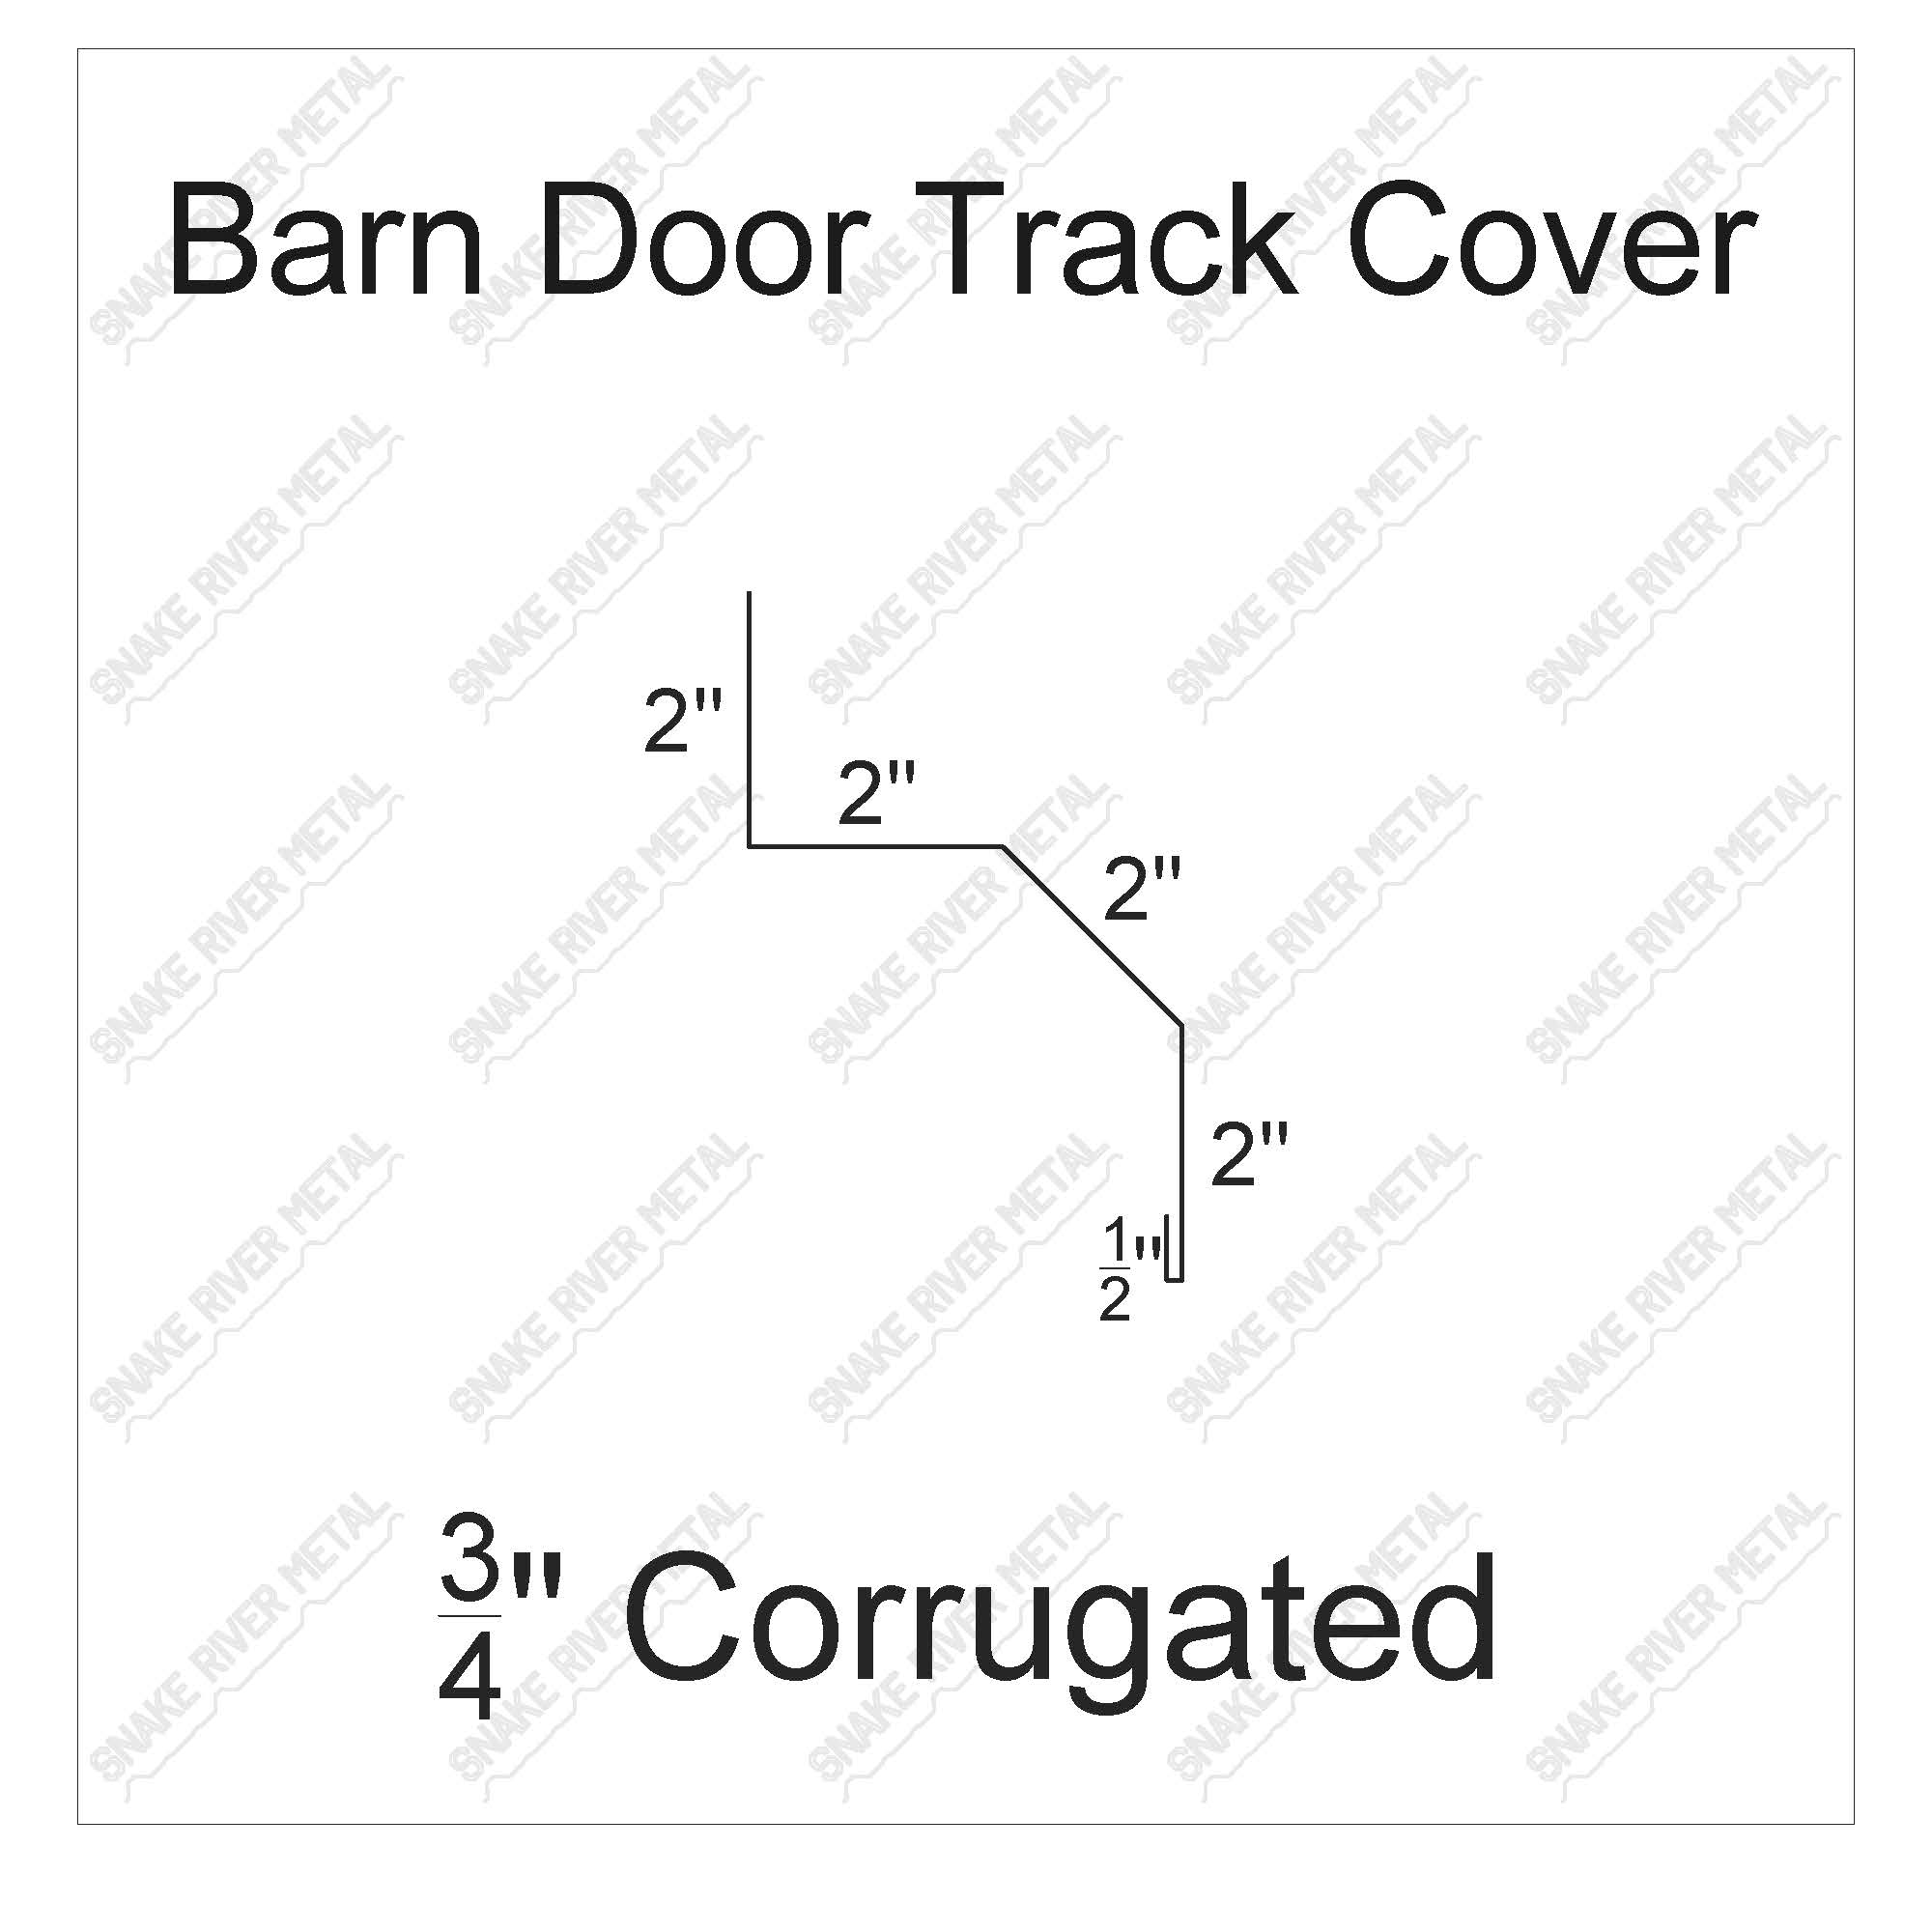 Barn Door Track Cover - Corrugated Trim